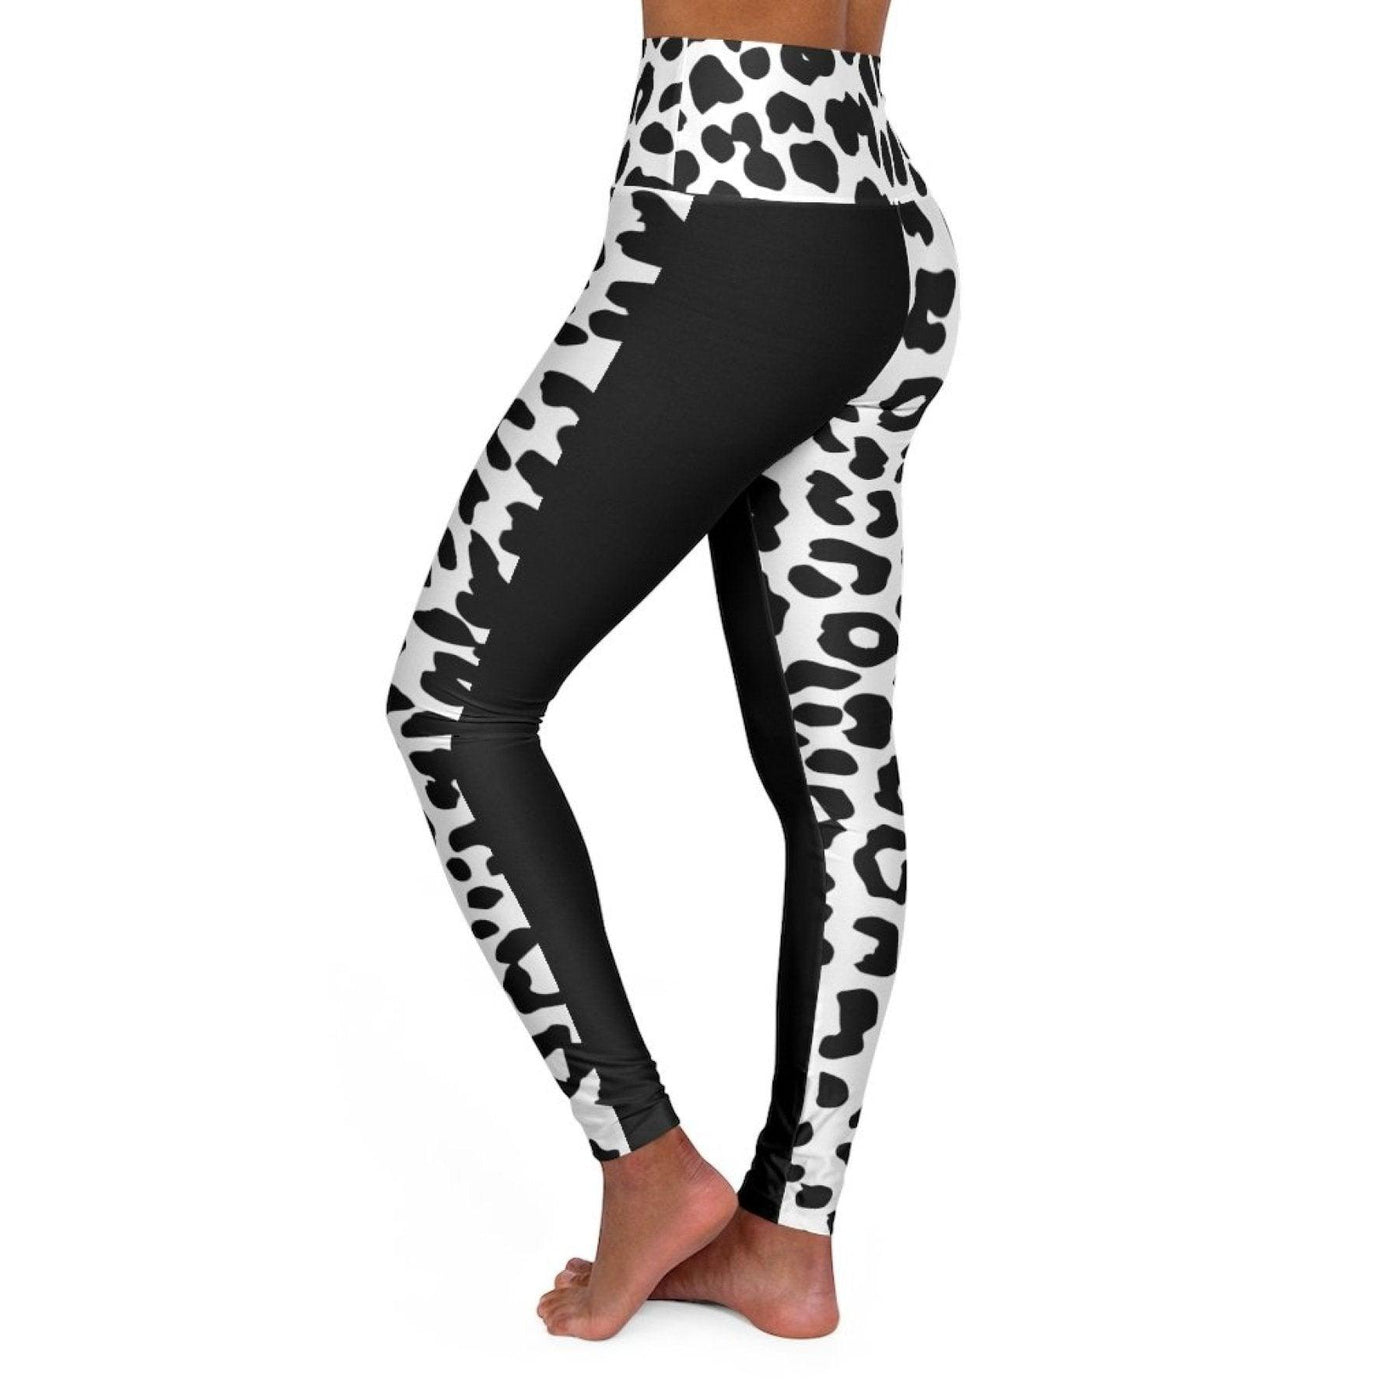 High Waisted Yoga Leggings, Black And White Half-Tone Leopard Style Pants - fashion$ense-6263